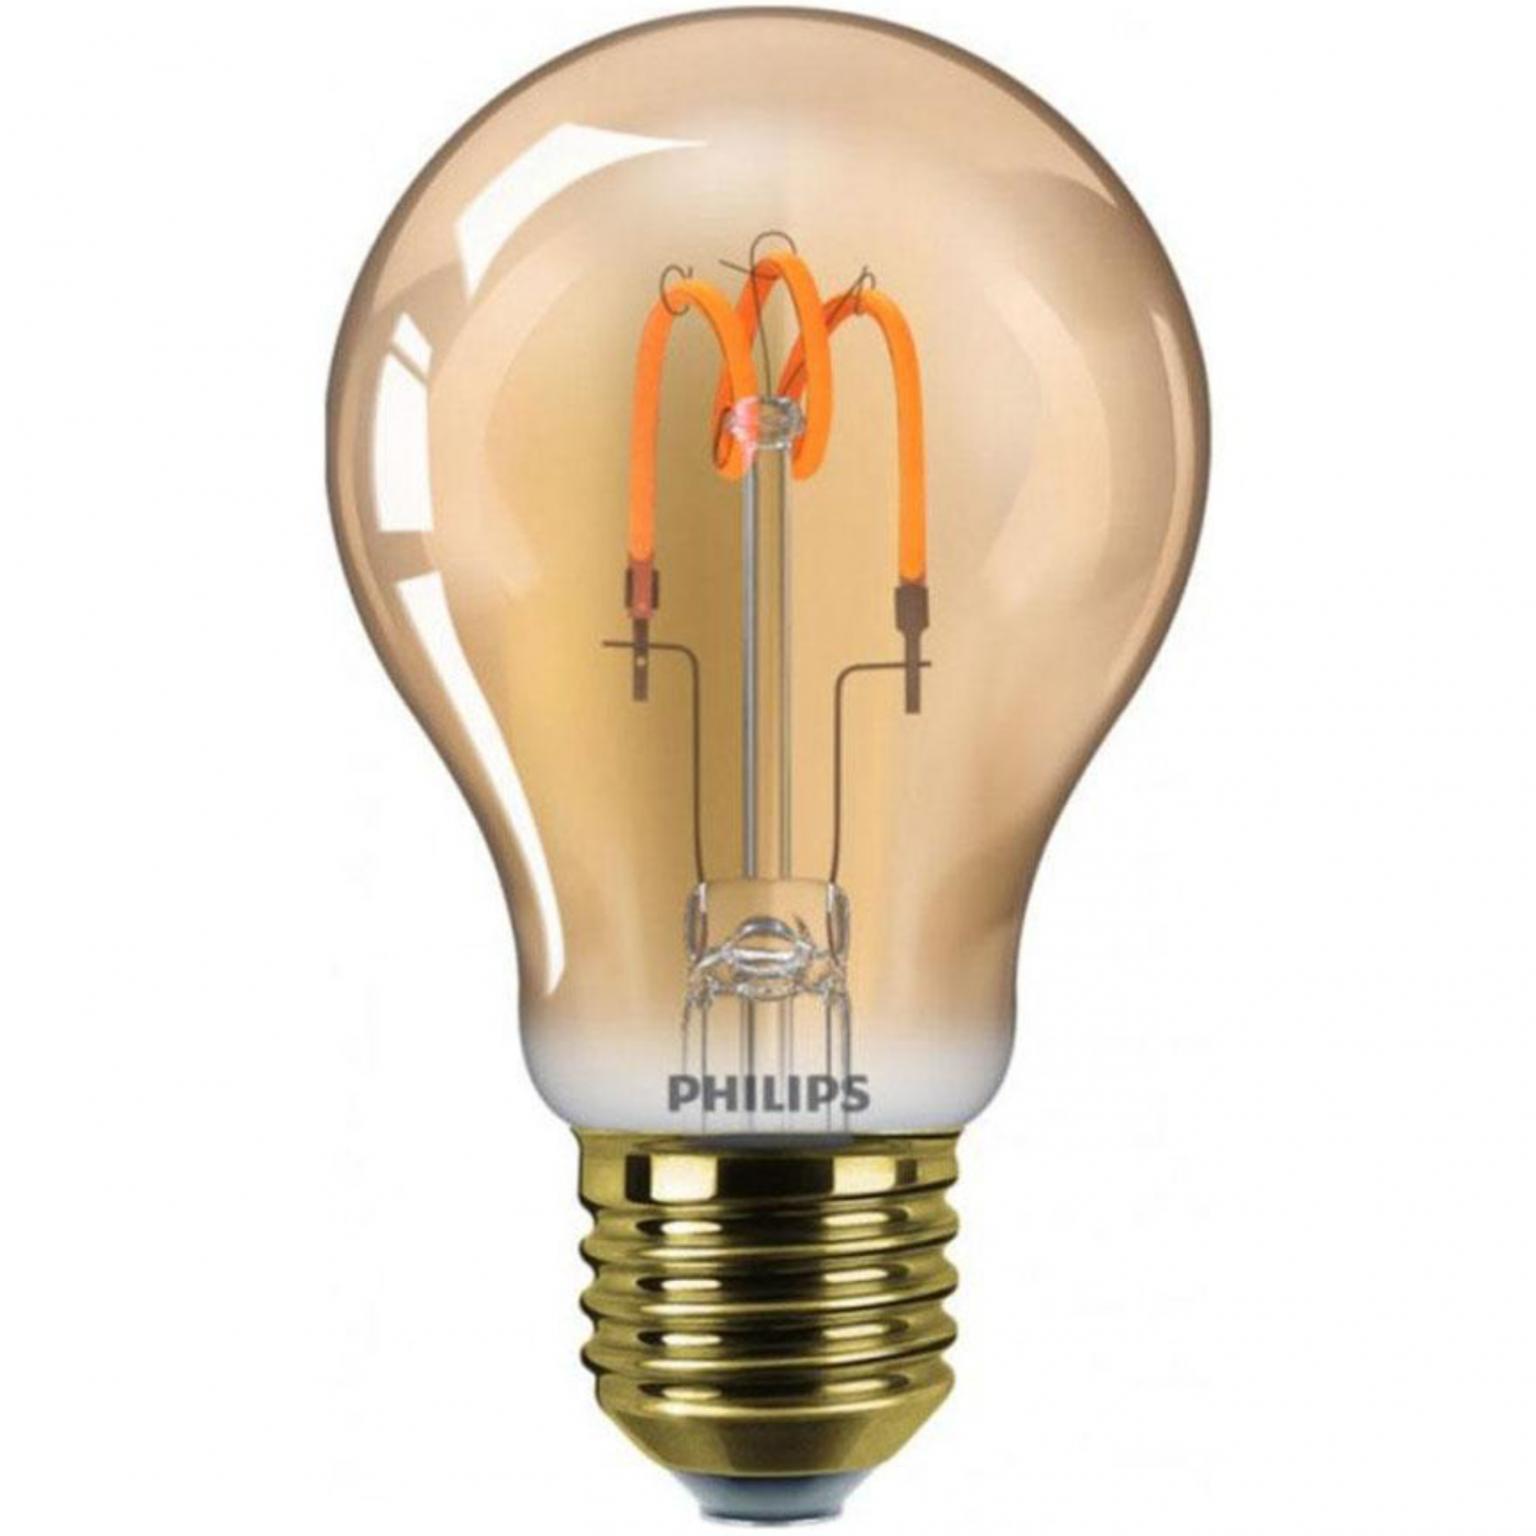 Filament LED-lamp - 250 lumen - Philips - Philips